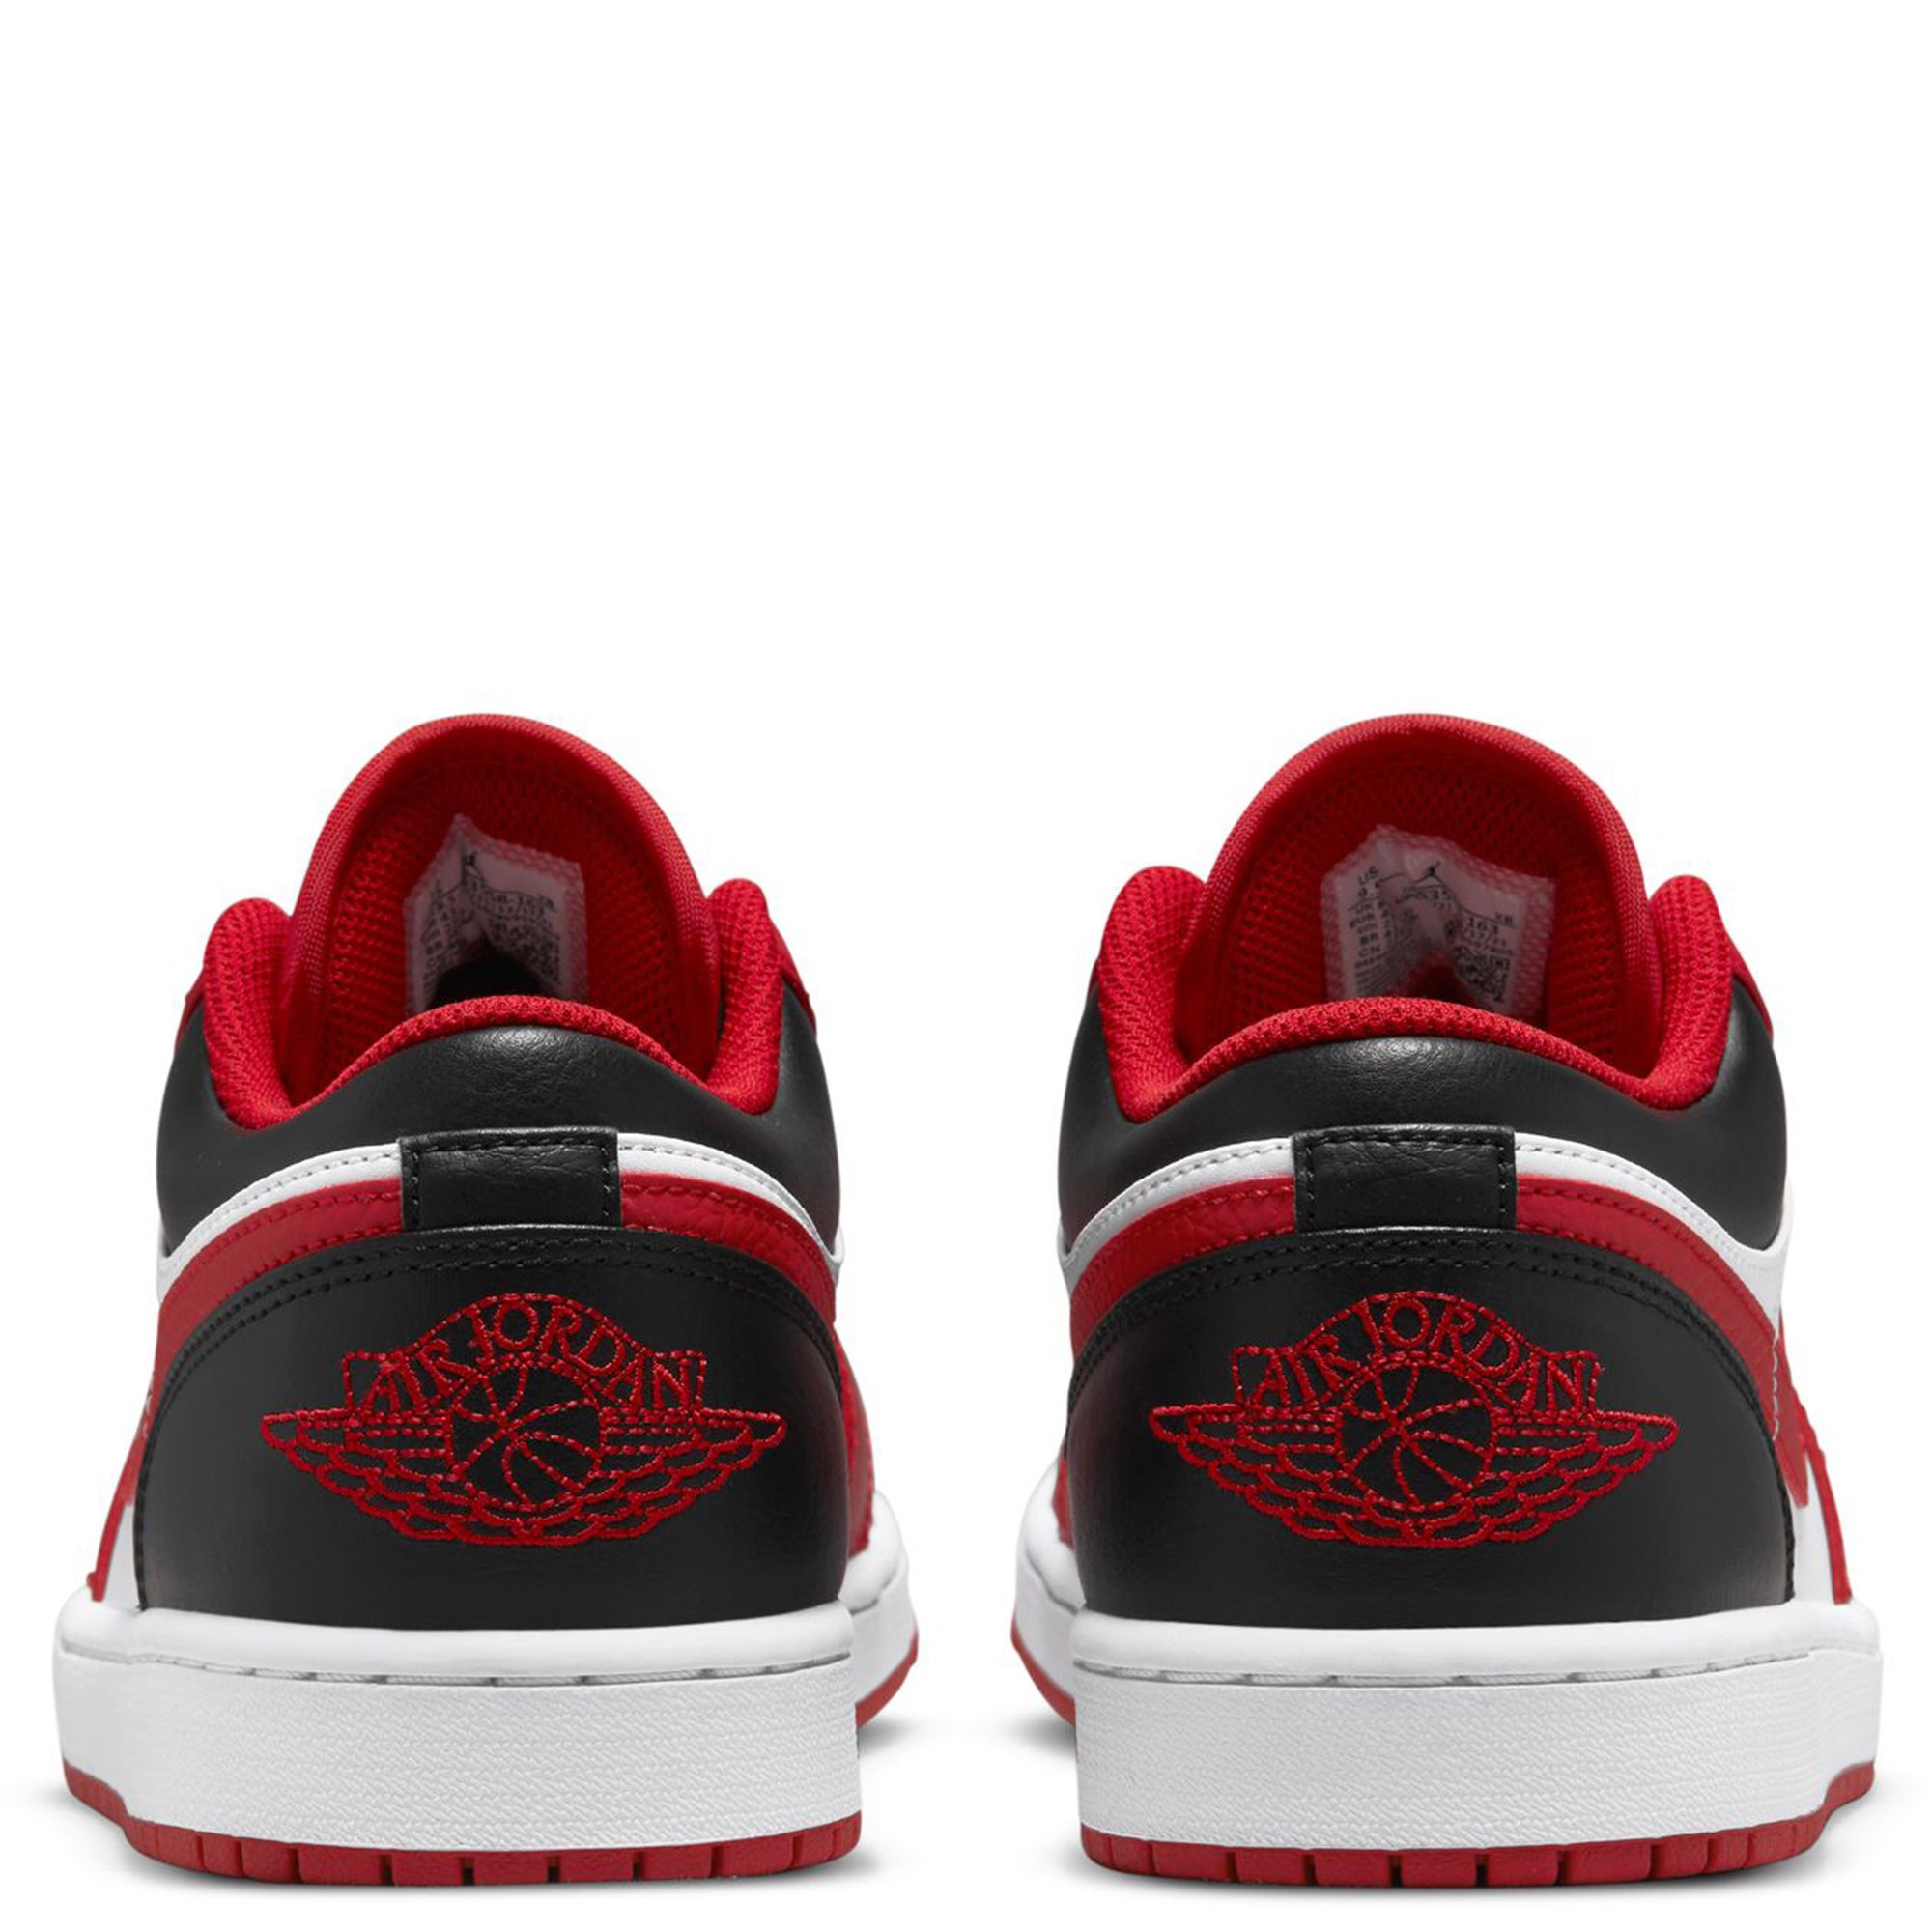 Air Jordan 1 Low White Gym Red Black 553558-163 Release Date